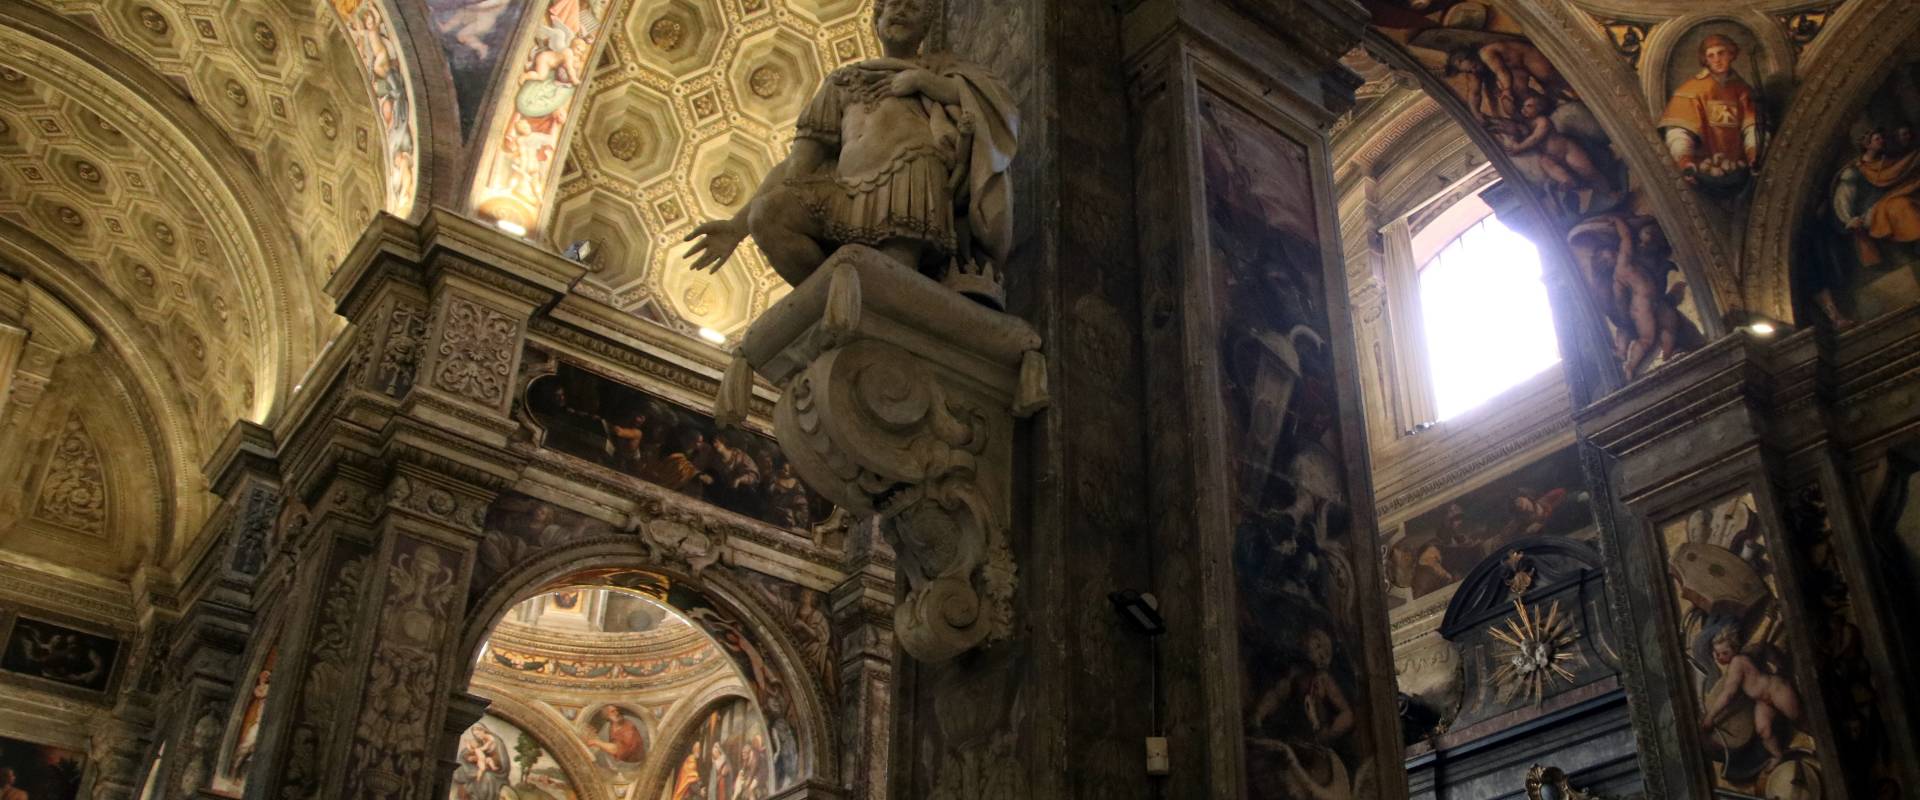 Basilica di Santa Maria di Campagna (Piacenza), interno 64 photo by Mongolo1984